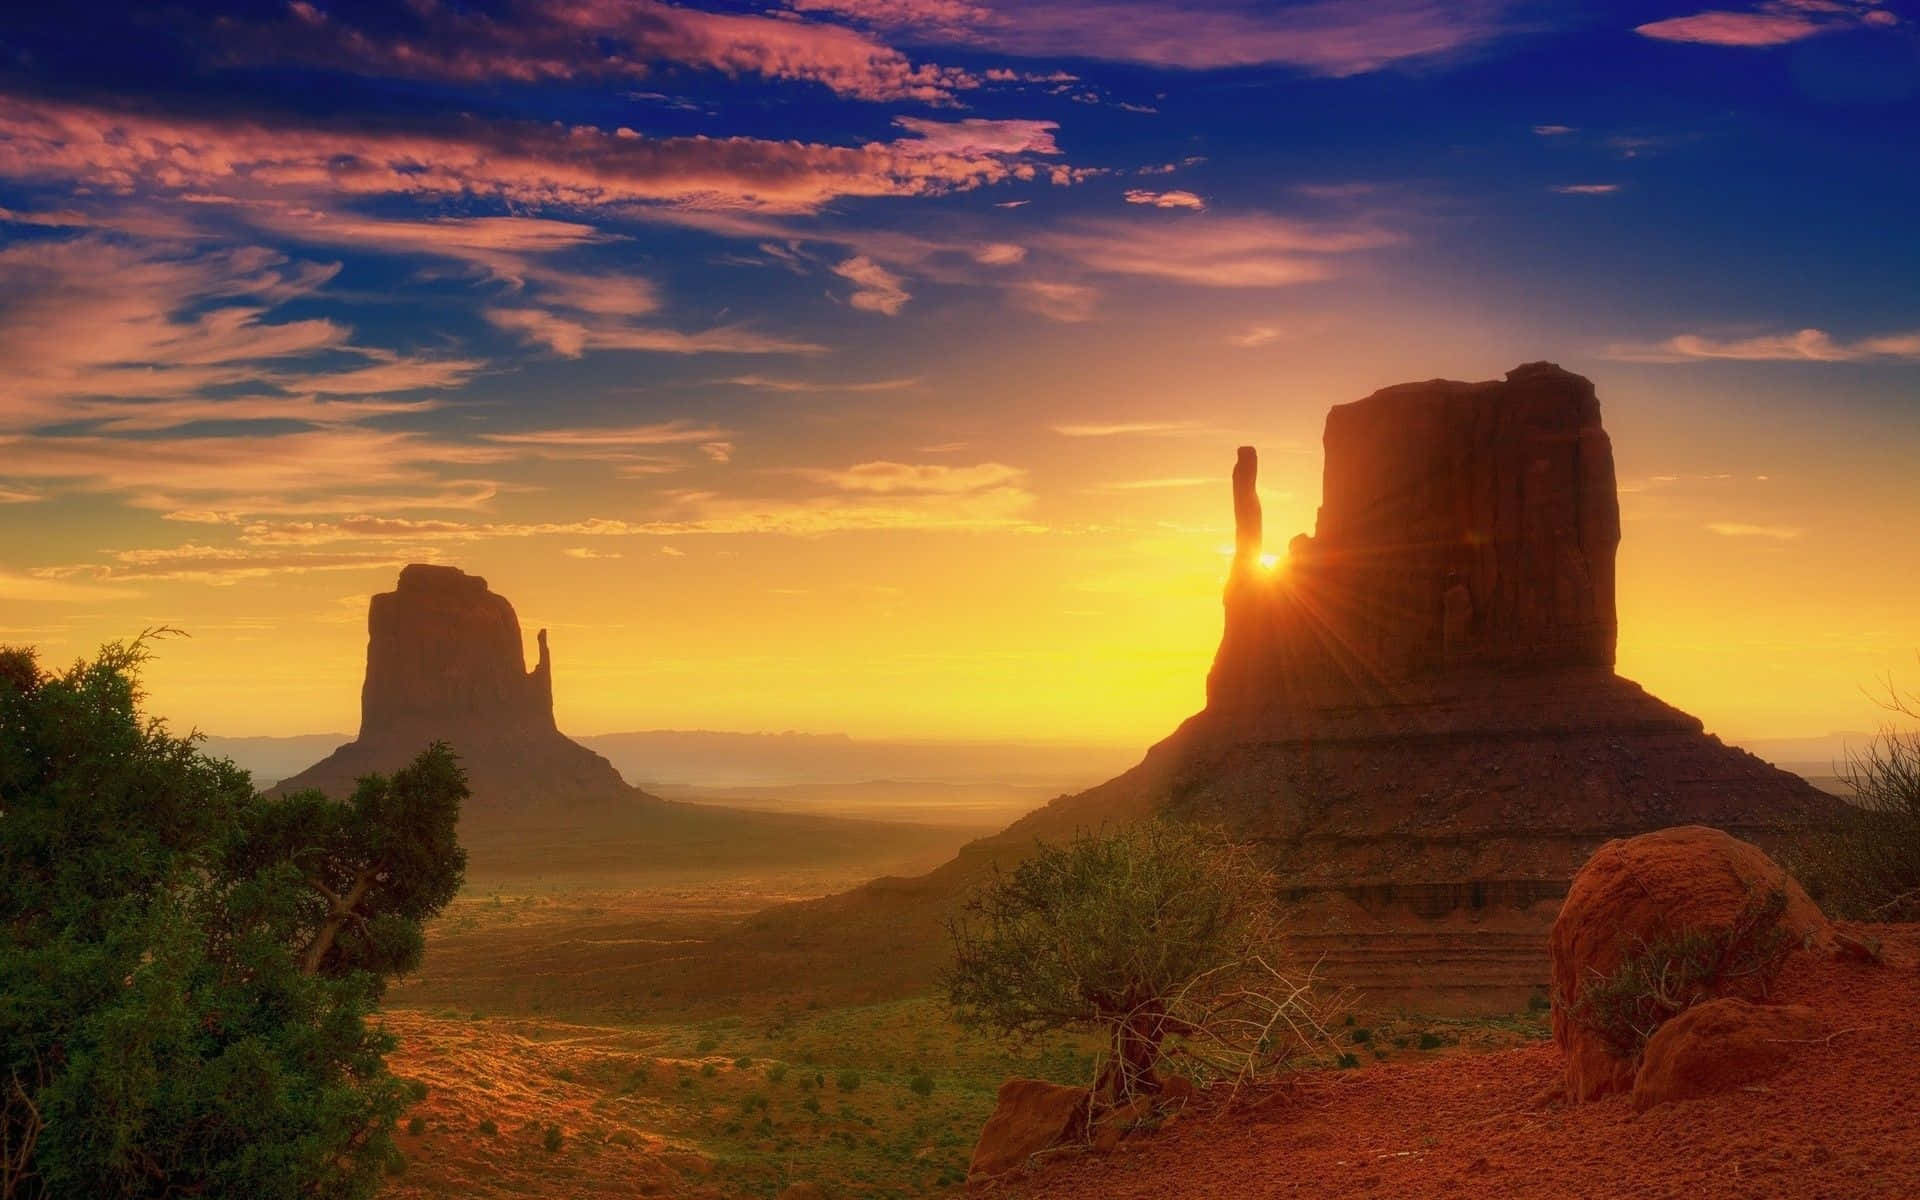 "Discover the Beauty of Arizona!"